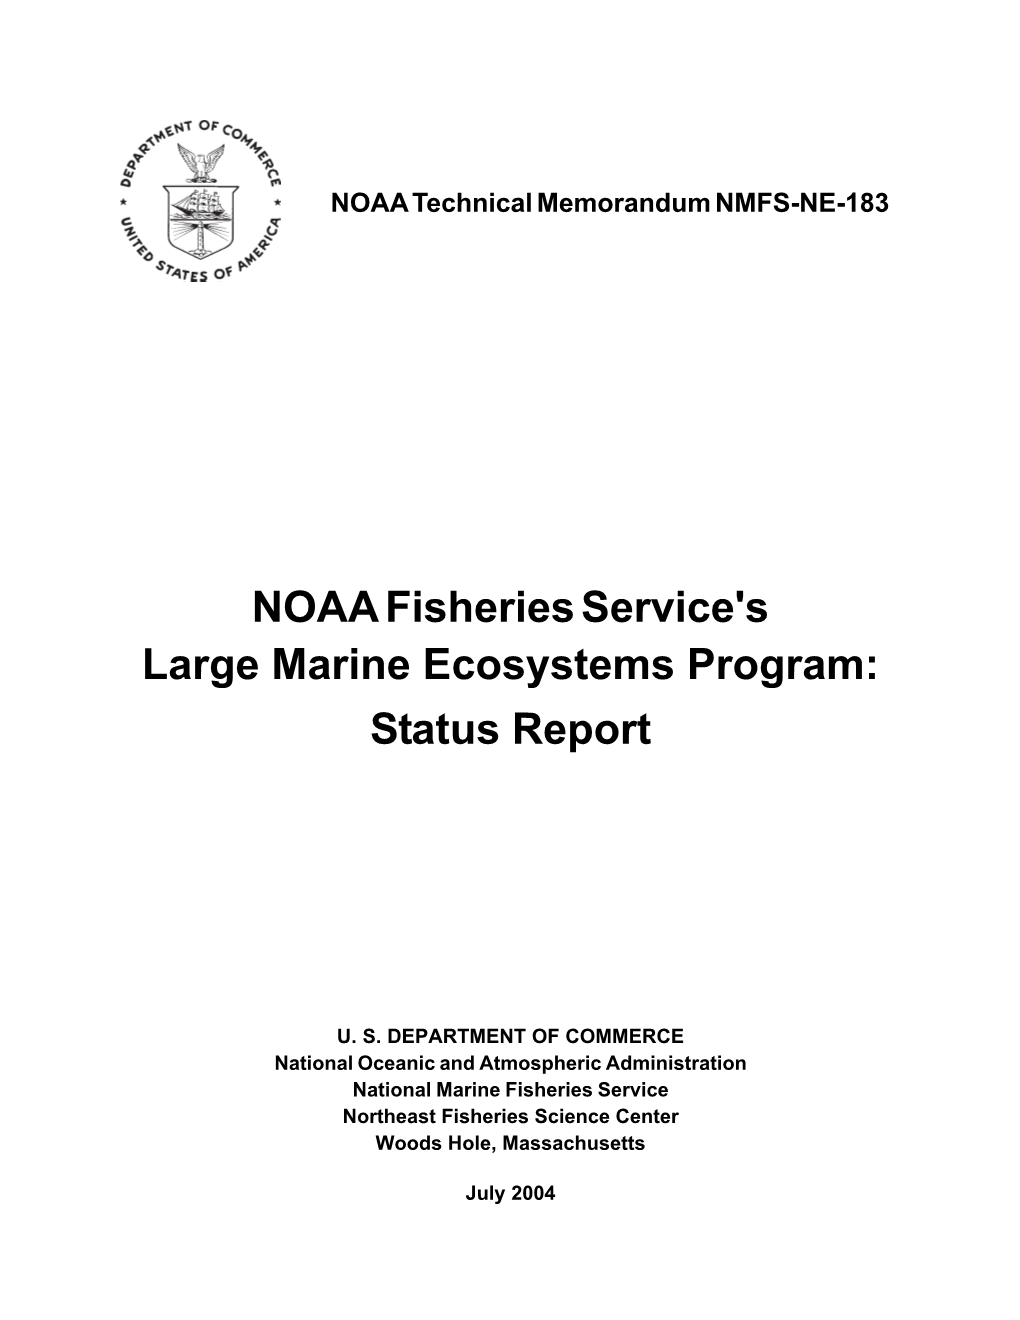 NOAA Fisheries Service's Large Marine Ecosystems Program: Status Report